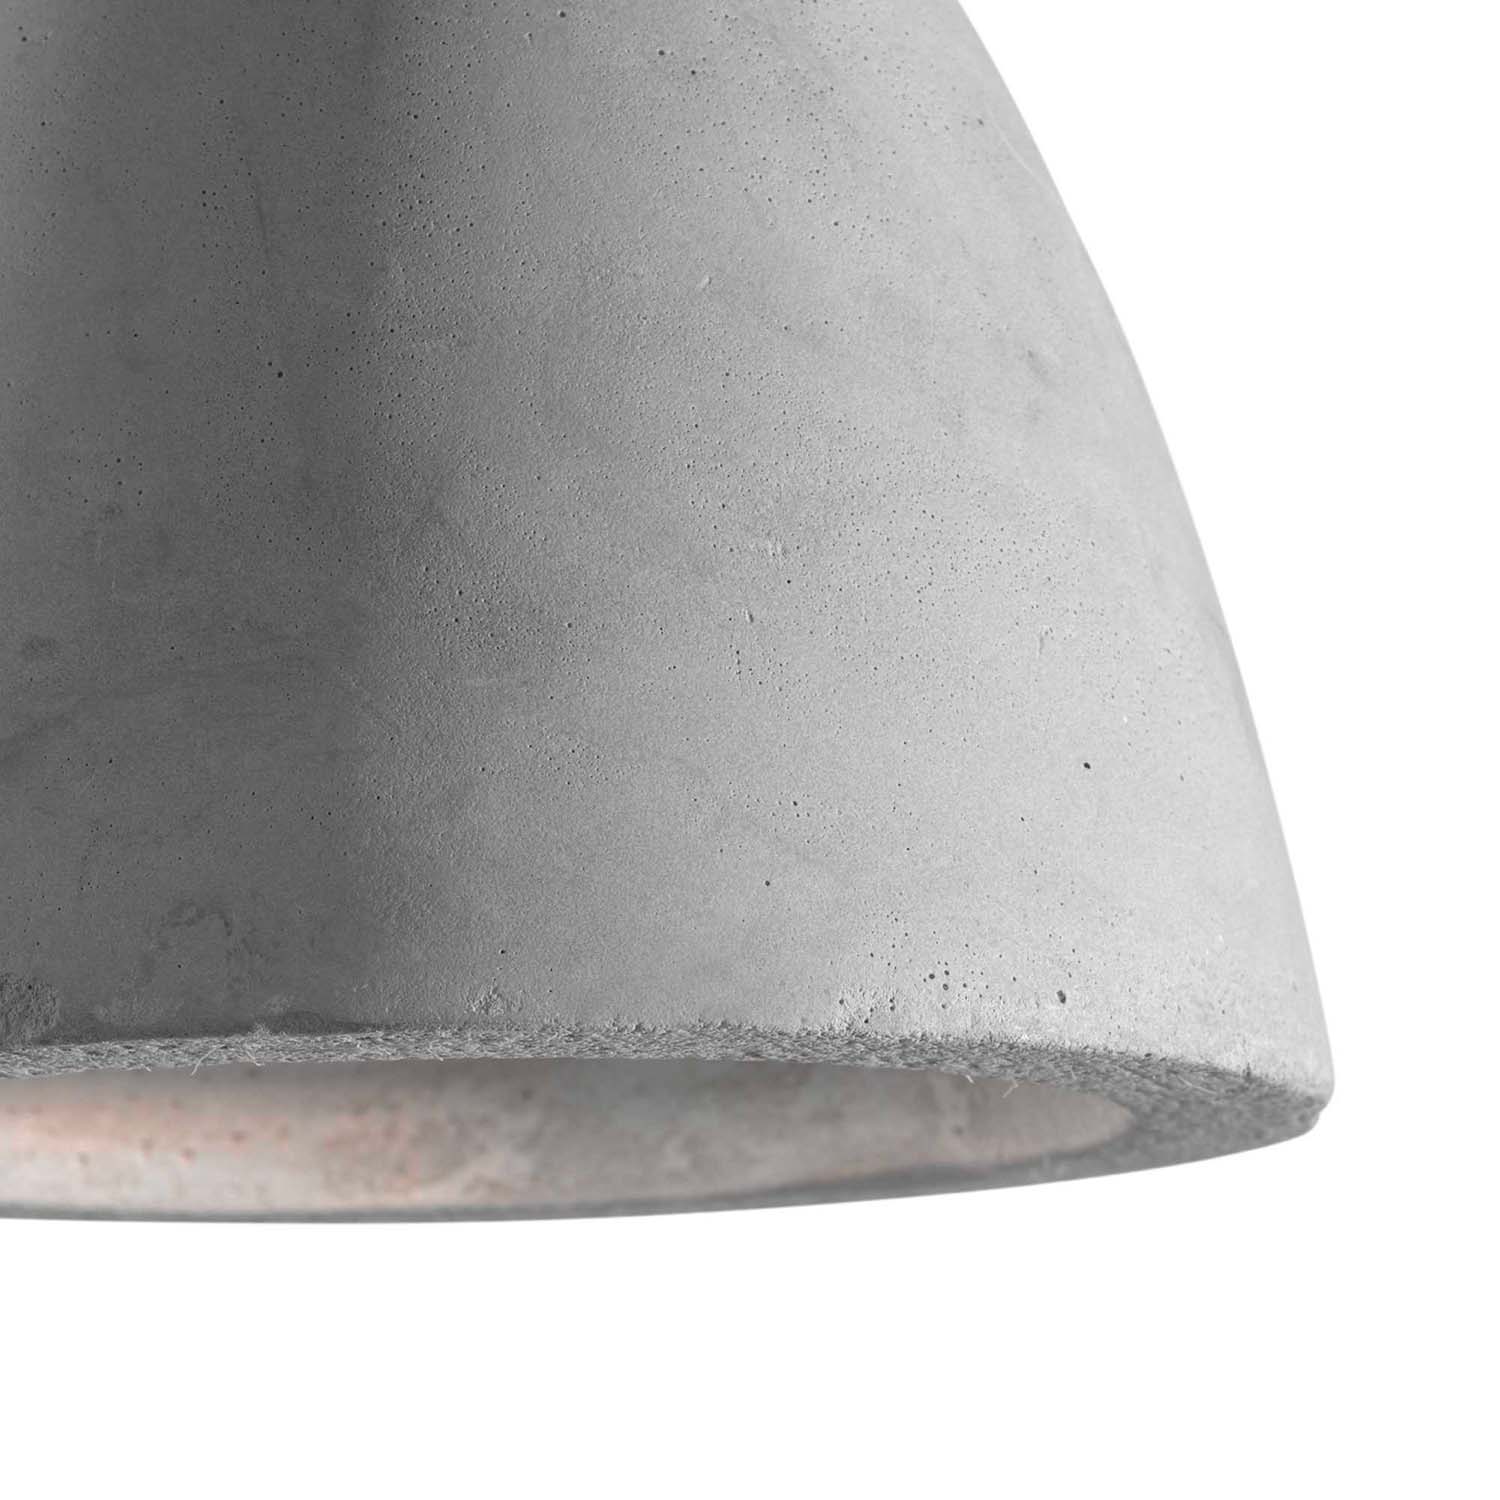 OIL 1 - Industrial gray concrete pendant light